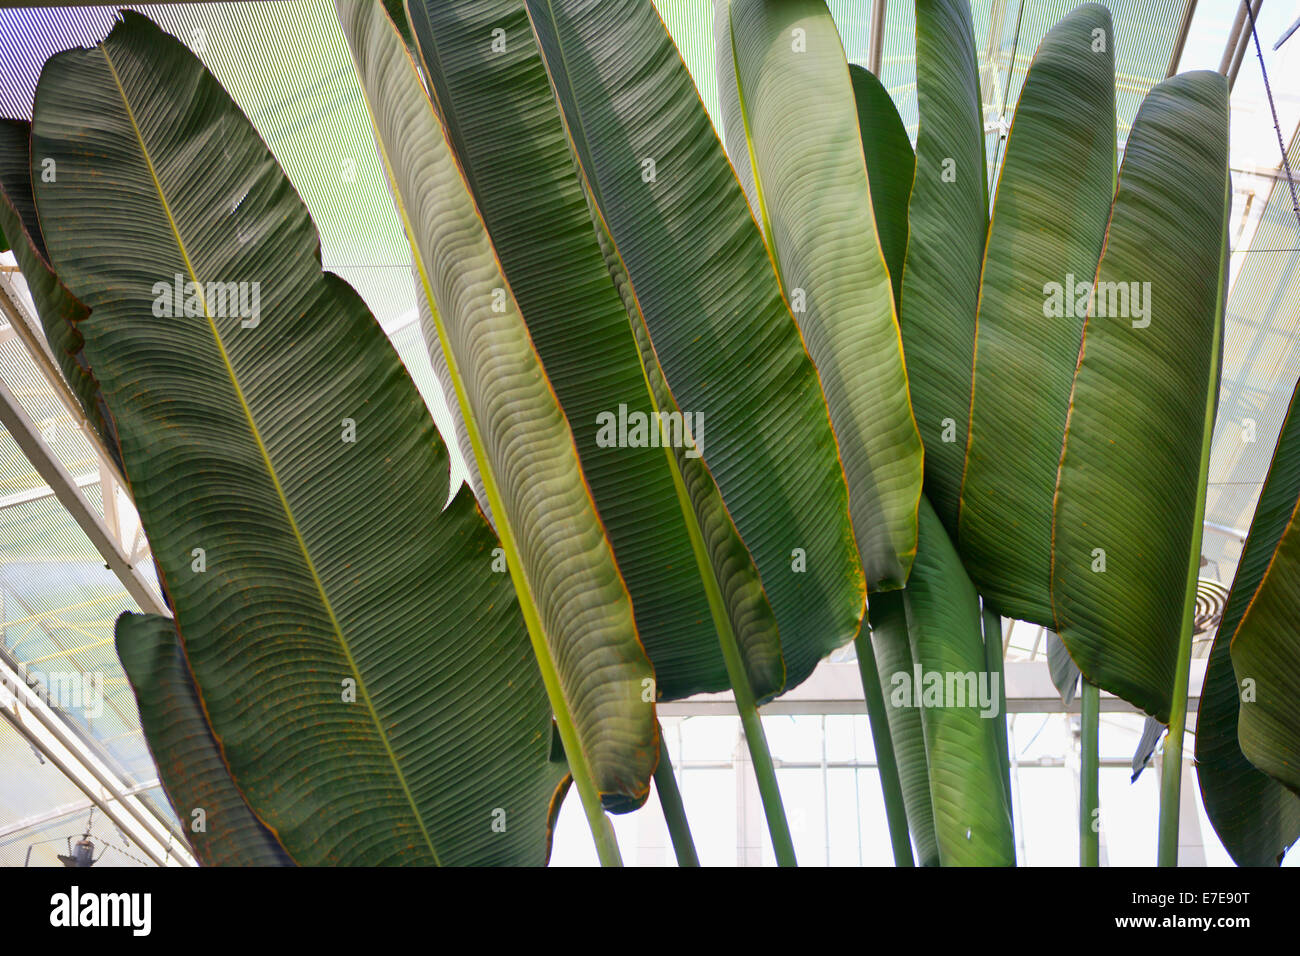 Ravenala madagascariensis hi-res stock photography and images - Alamy